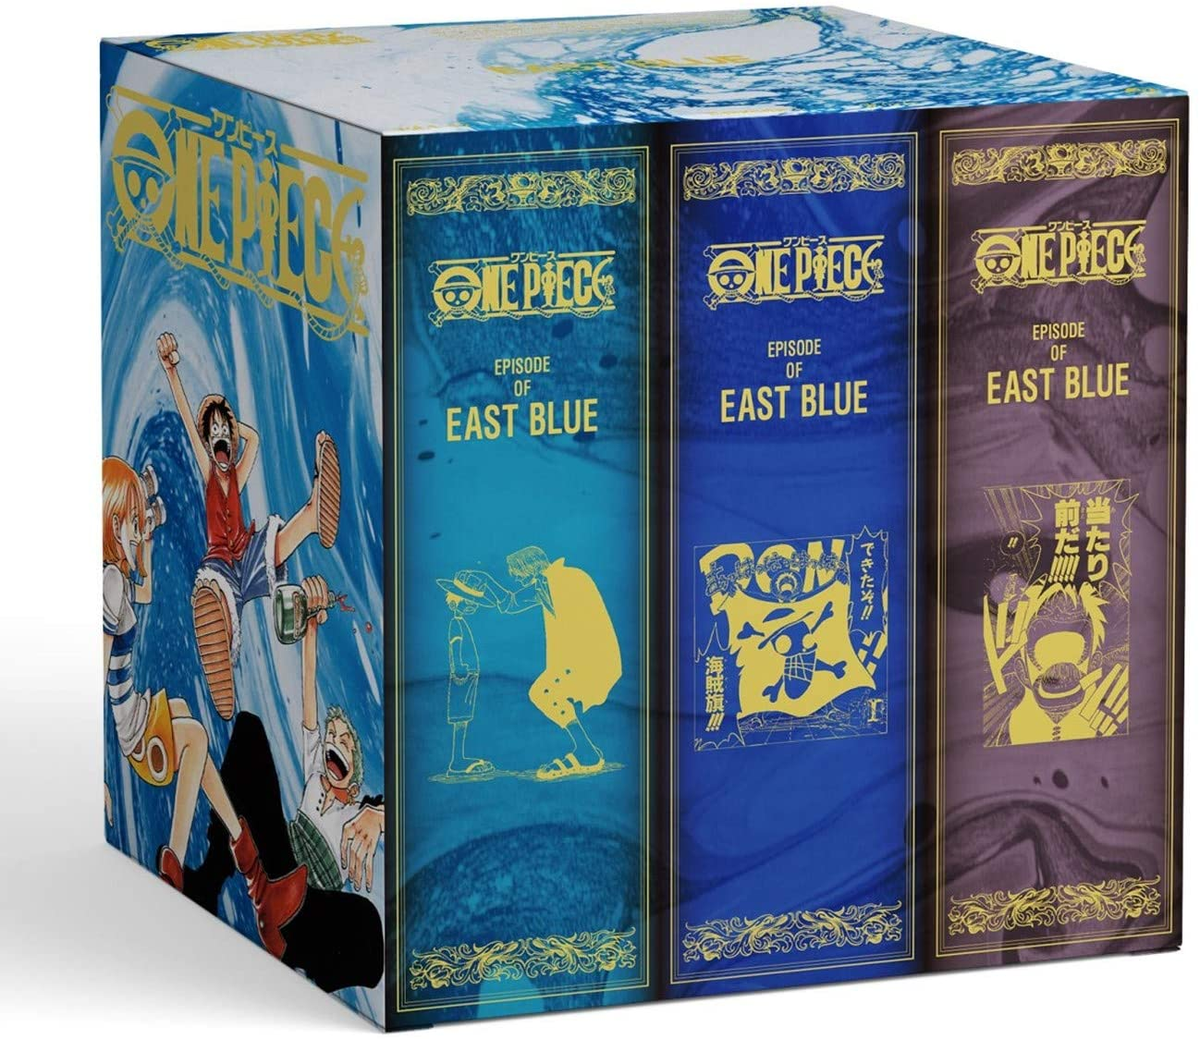 Shonen Jump News Unofficial One Piece S Comic Box Set Designs Episode 1 East Blue T Co G9ago2zxvw Twitter